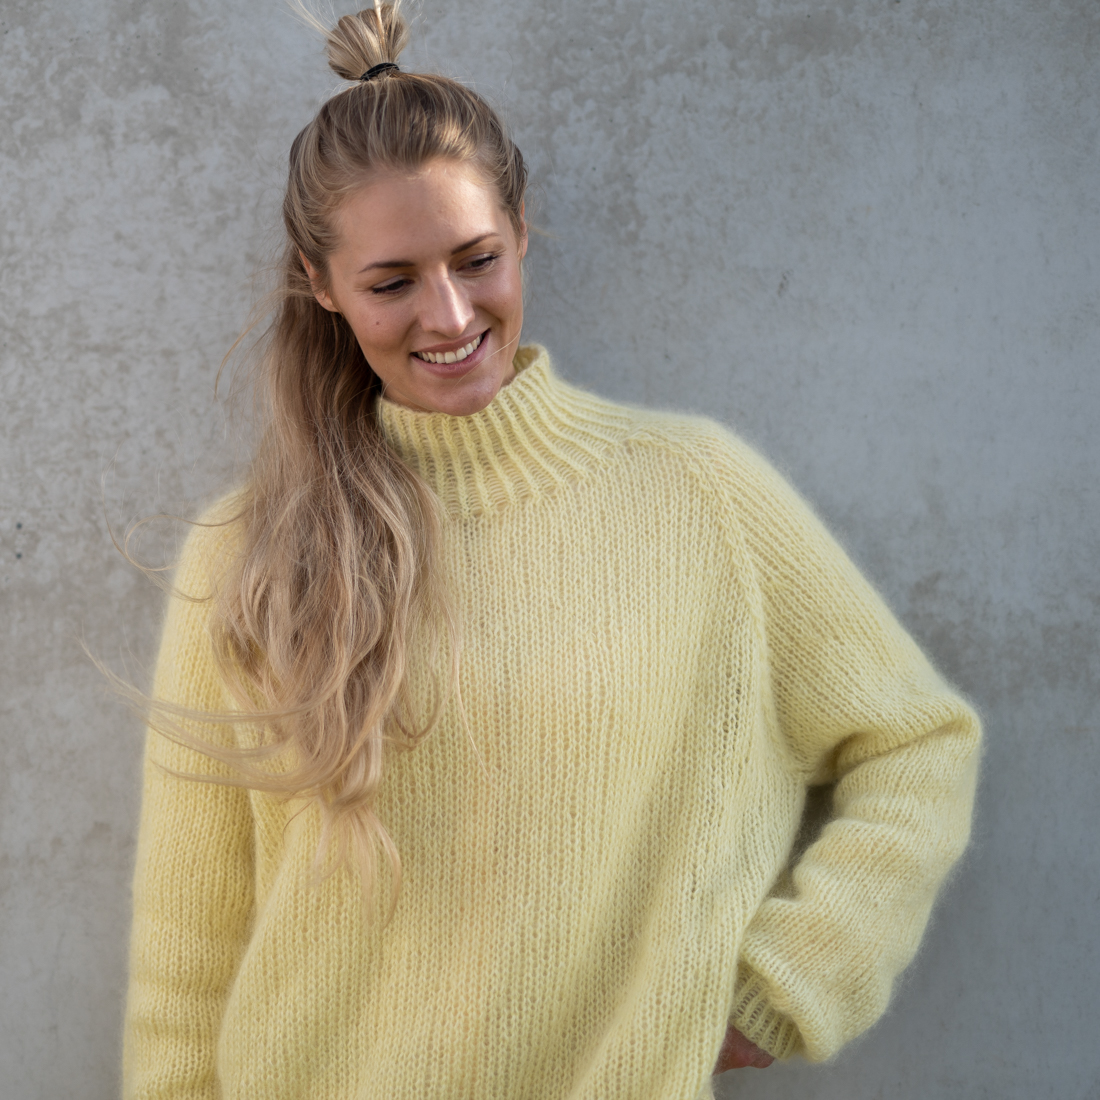  - Lemonade sweater | Turtleneck sweater knitting pattern - by HipKnithop - 09/10/2019